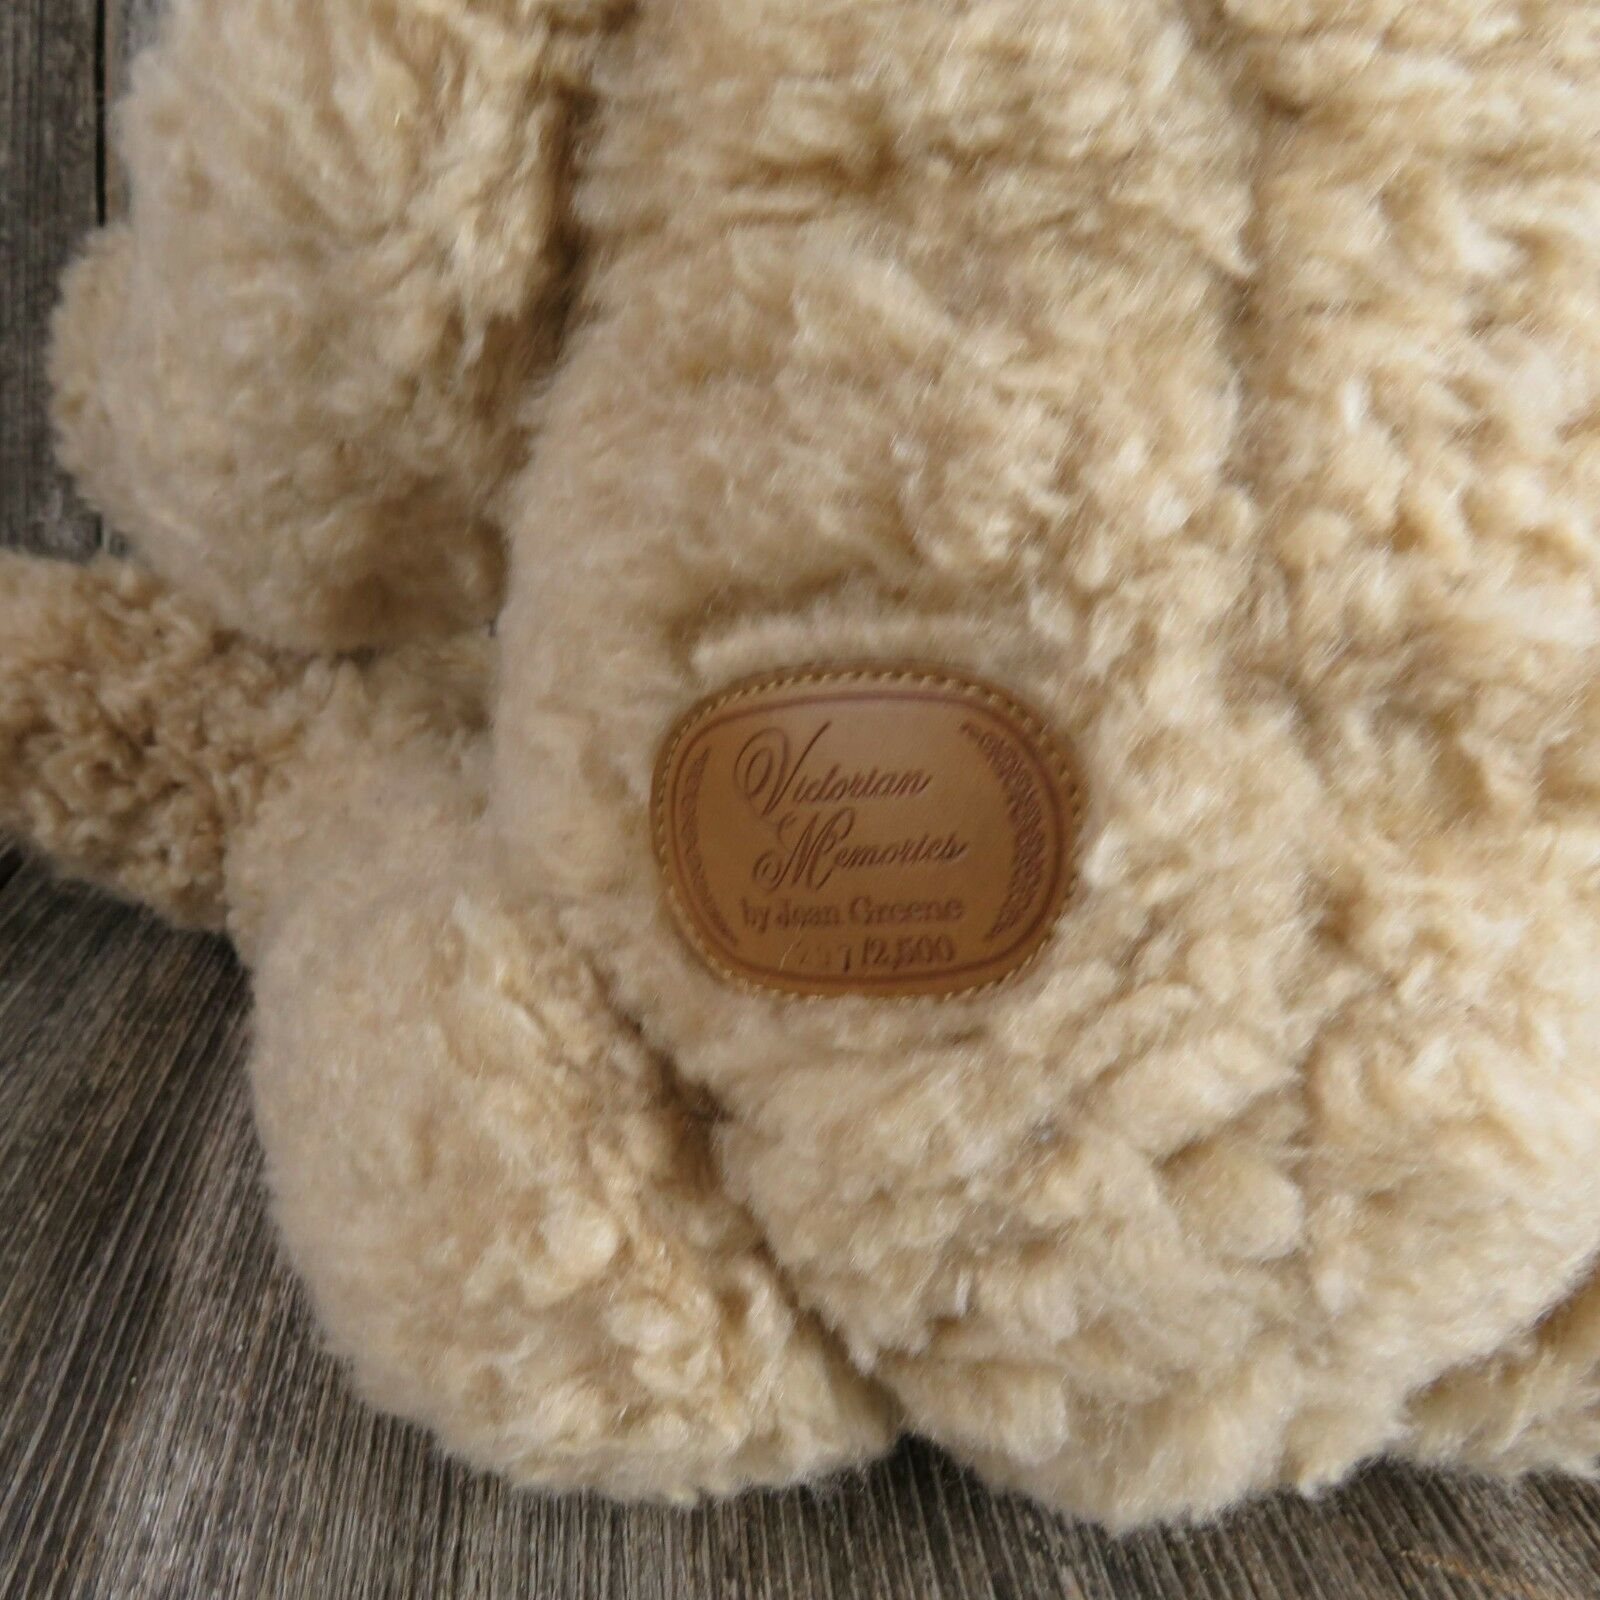 Vintage Jointed Teddy Bear Plush Victorian Memories Joan Greene 1991 Stuffed Animal - At Grandma's Table